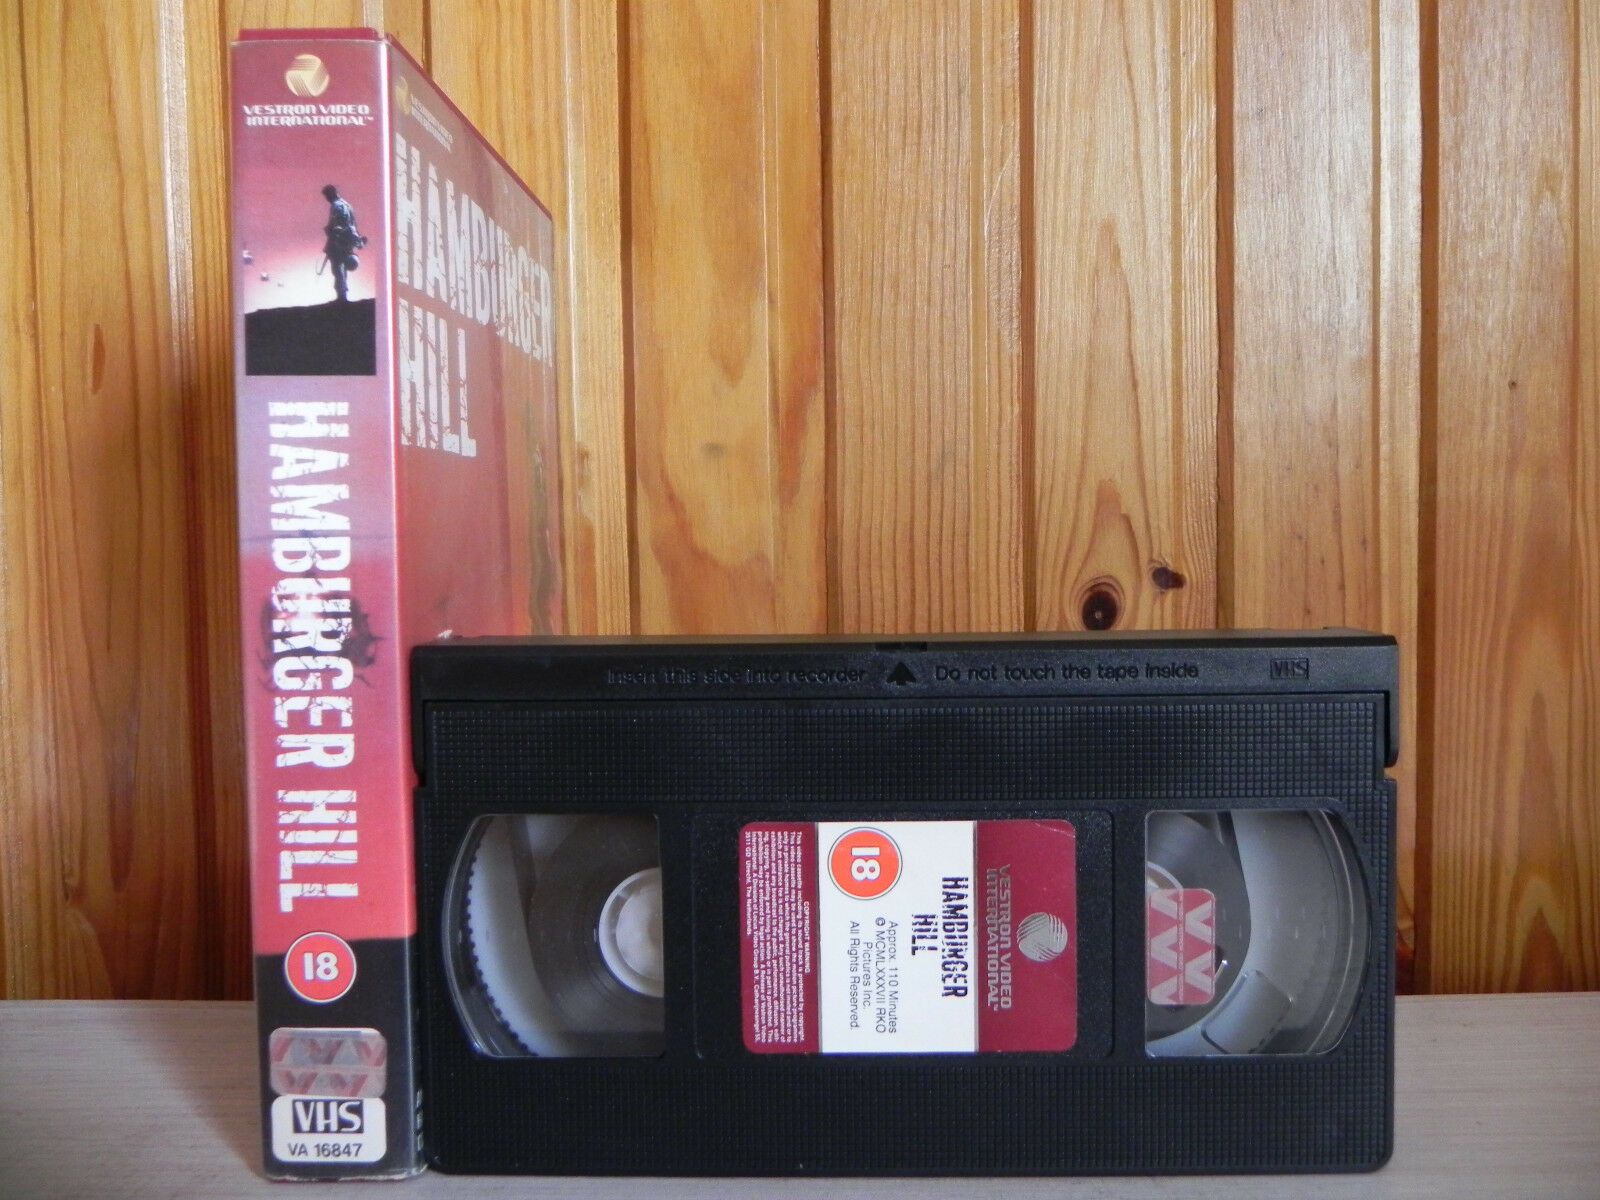 Hamburger Hill - Vestron - War Its Worst - Fought By Men At Their Best - VHS-